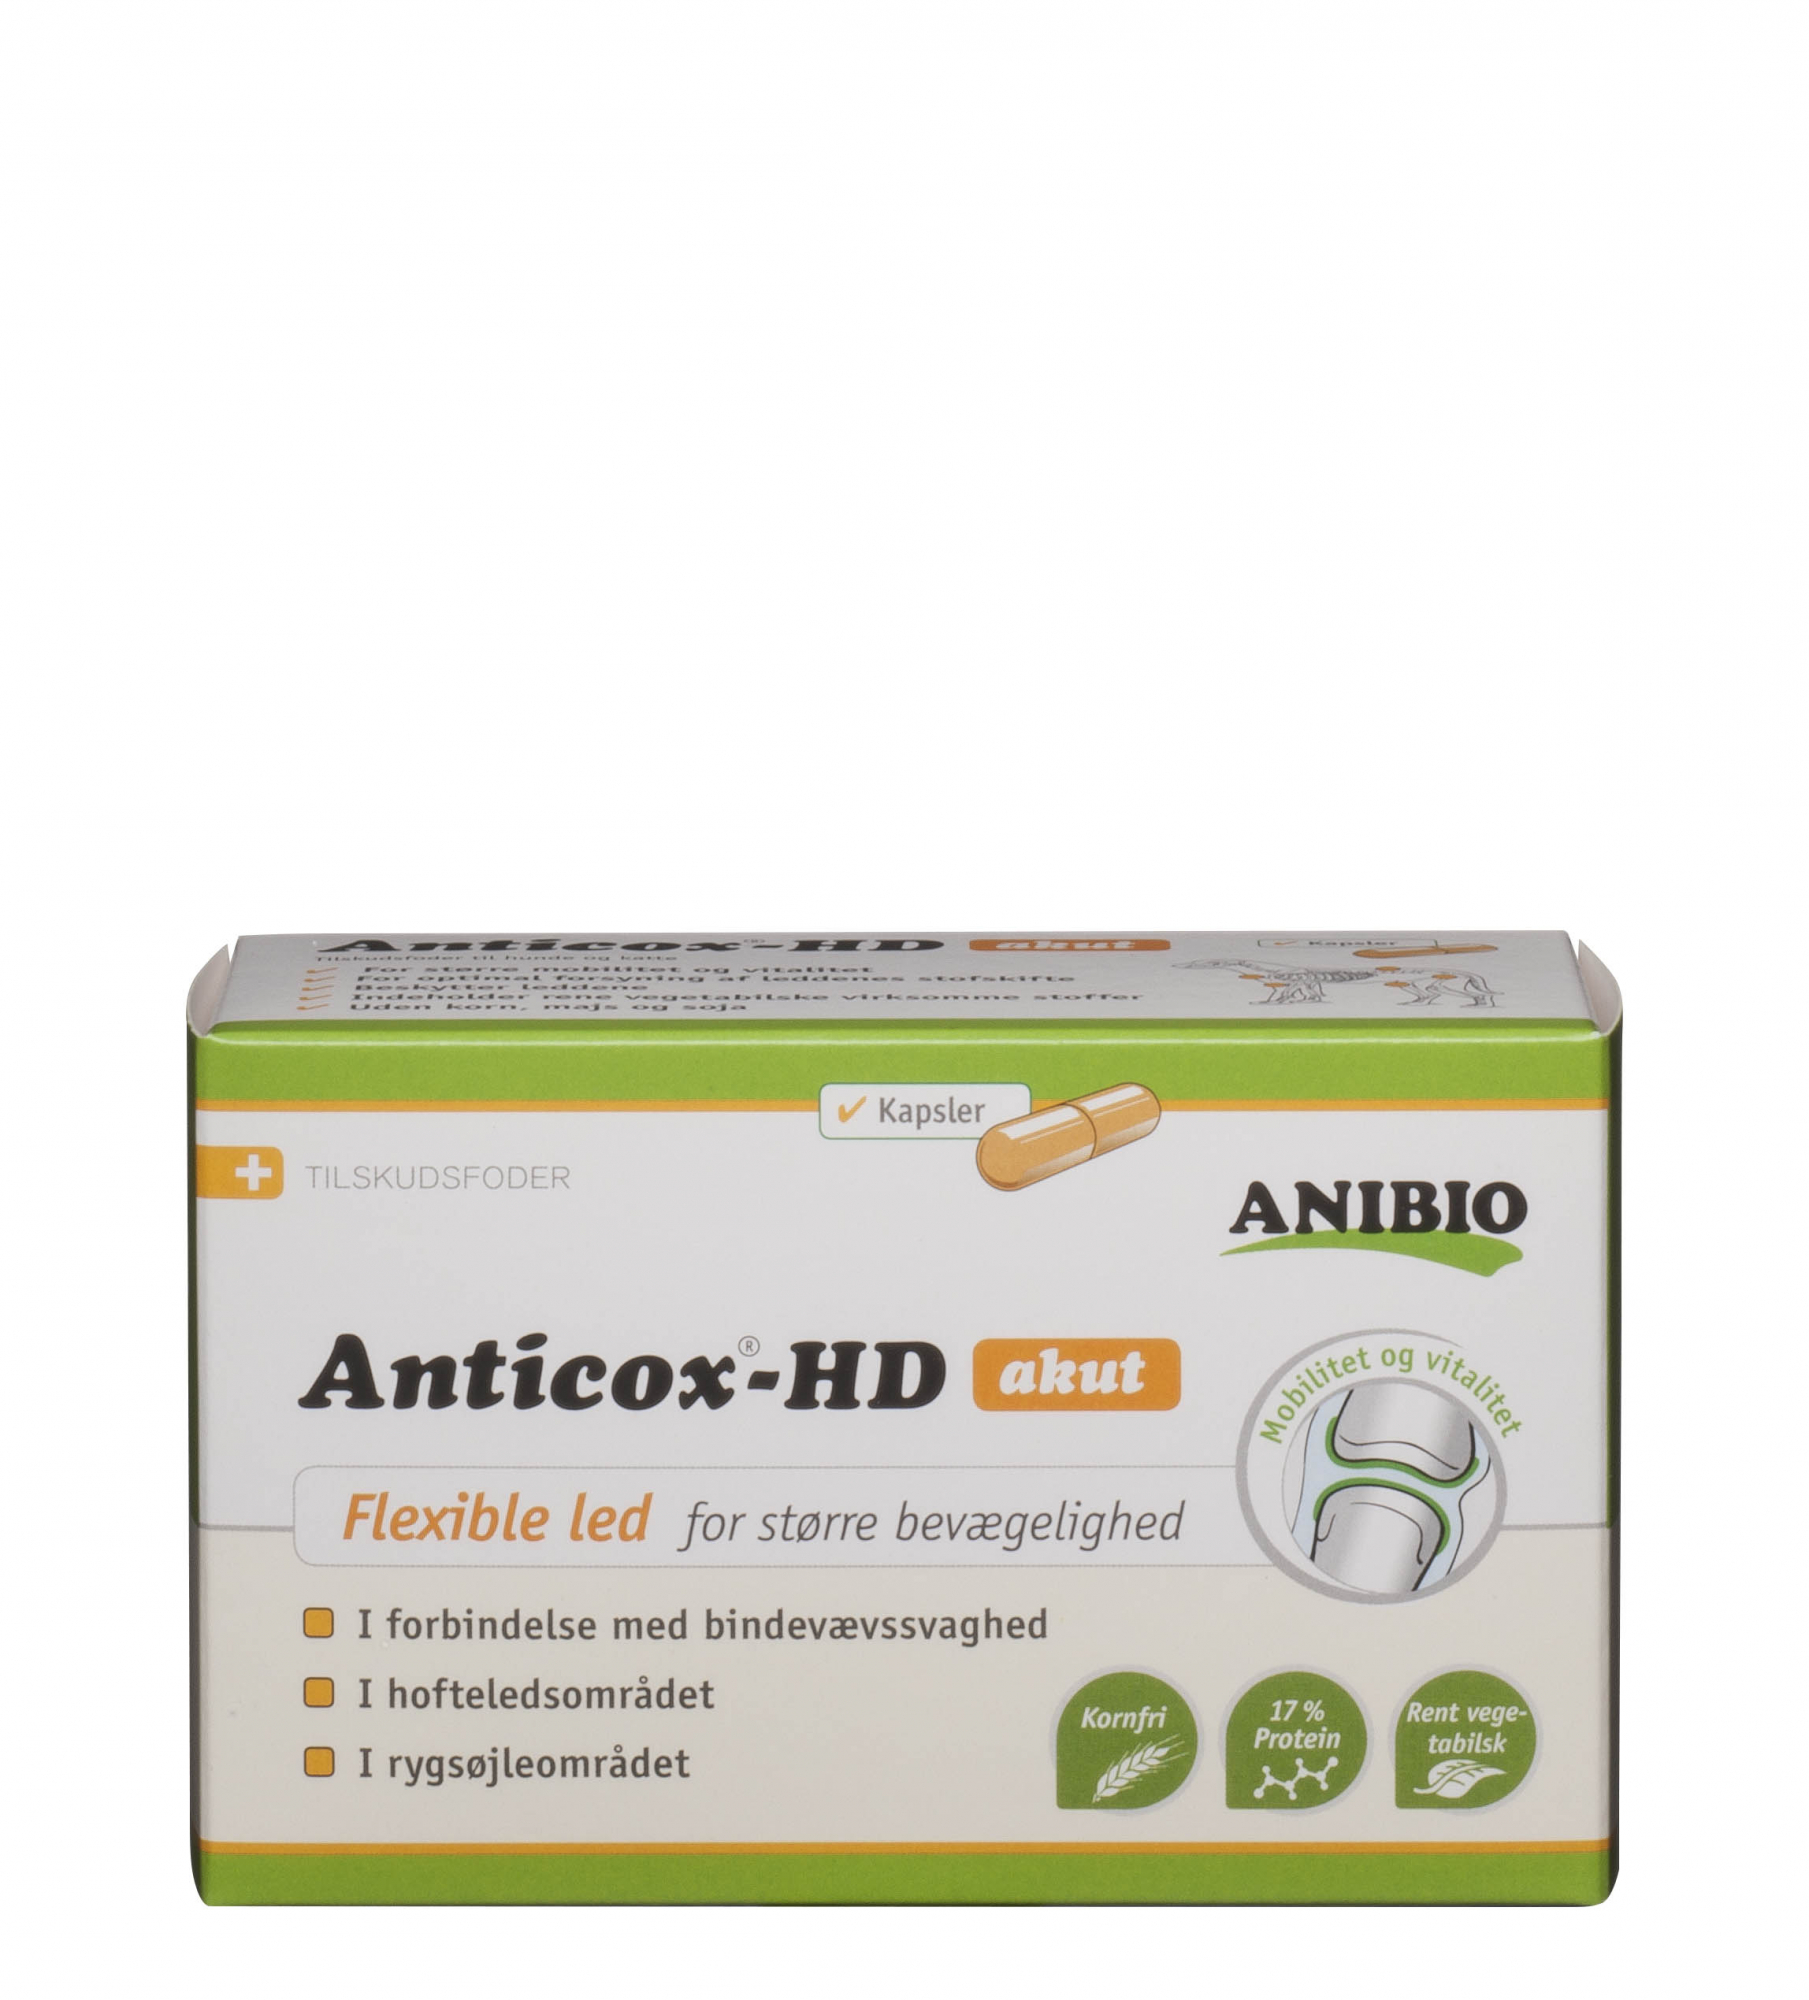 Anibio Anticox-HD Akut - KØB HER